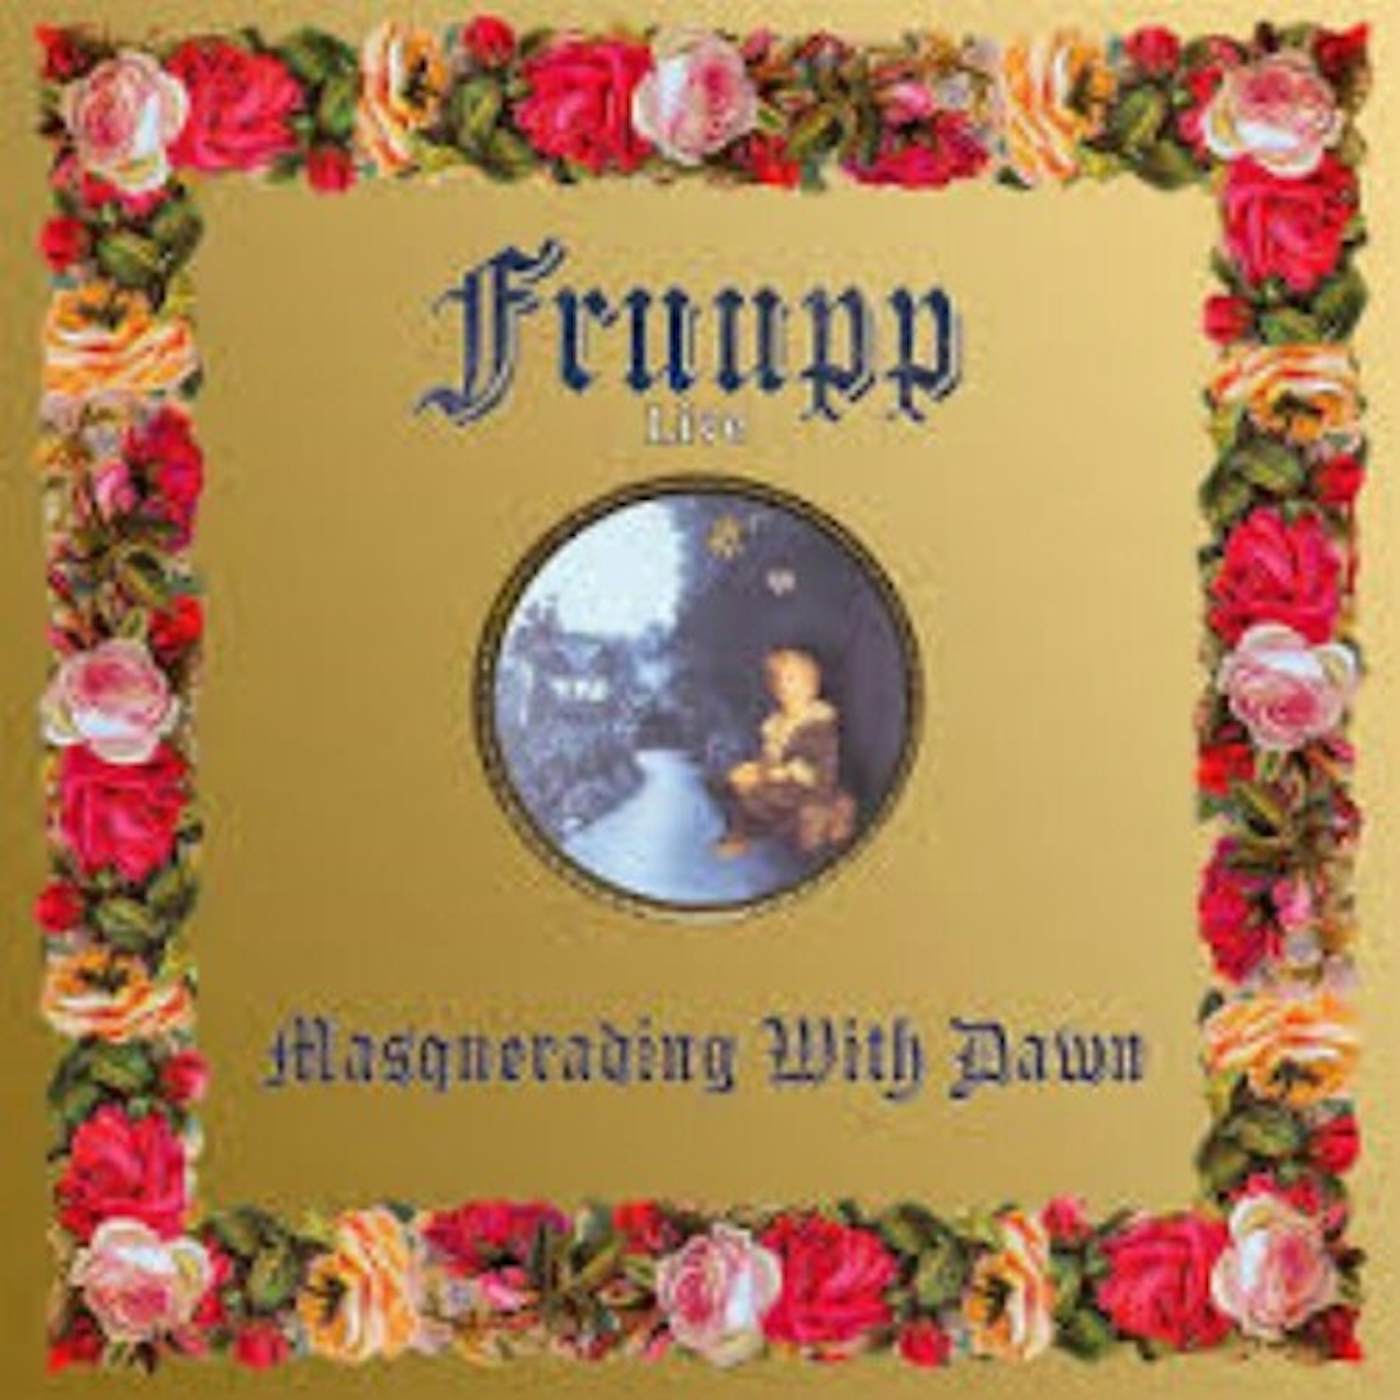 Fruupp MASQUERADING WITH DAWN CD